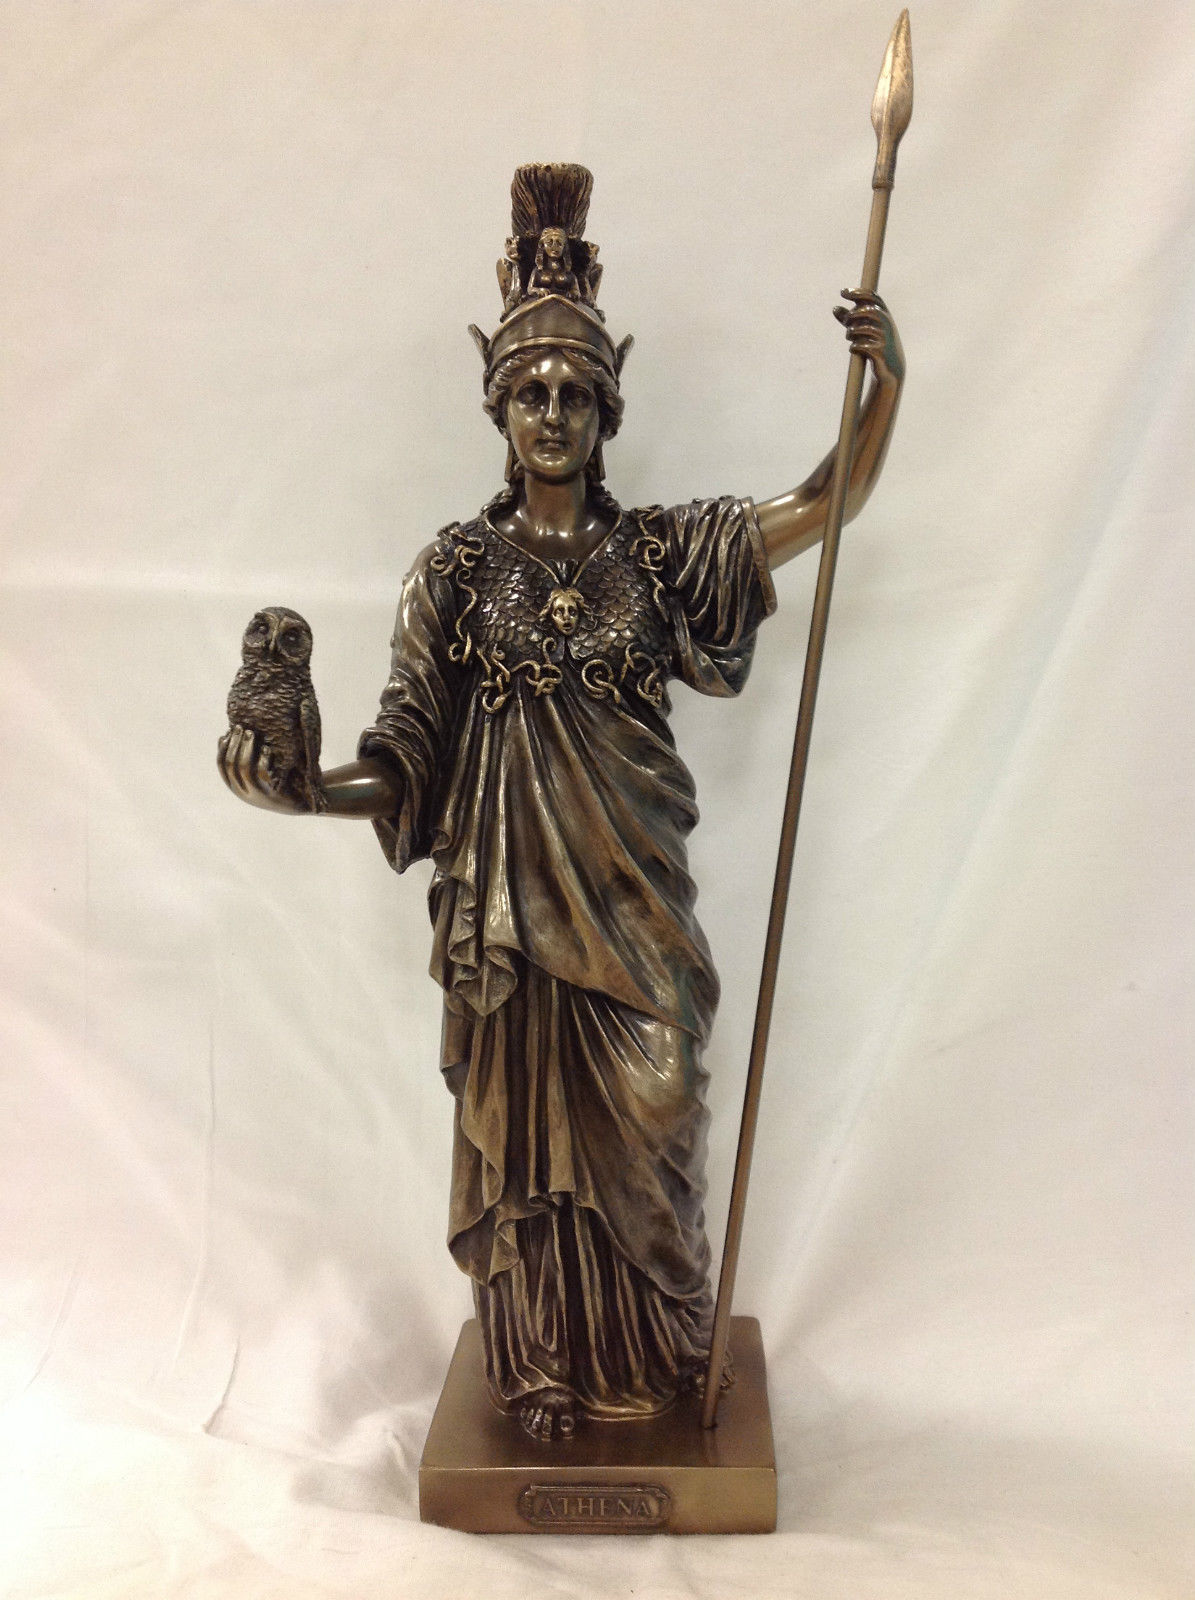 Athena Sculpture - Greek Goddess of Wisdom and War Statue Figure